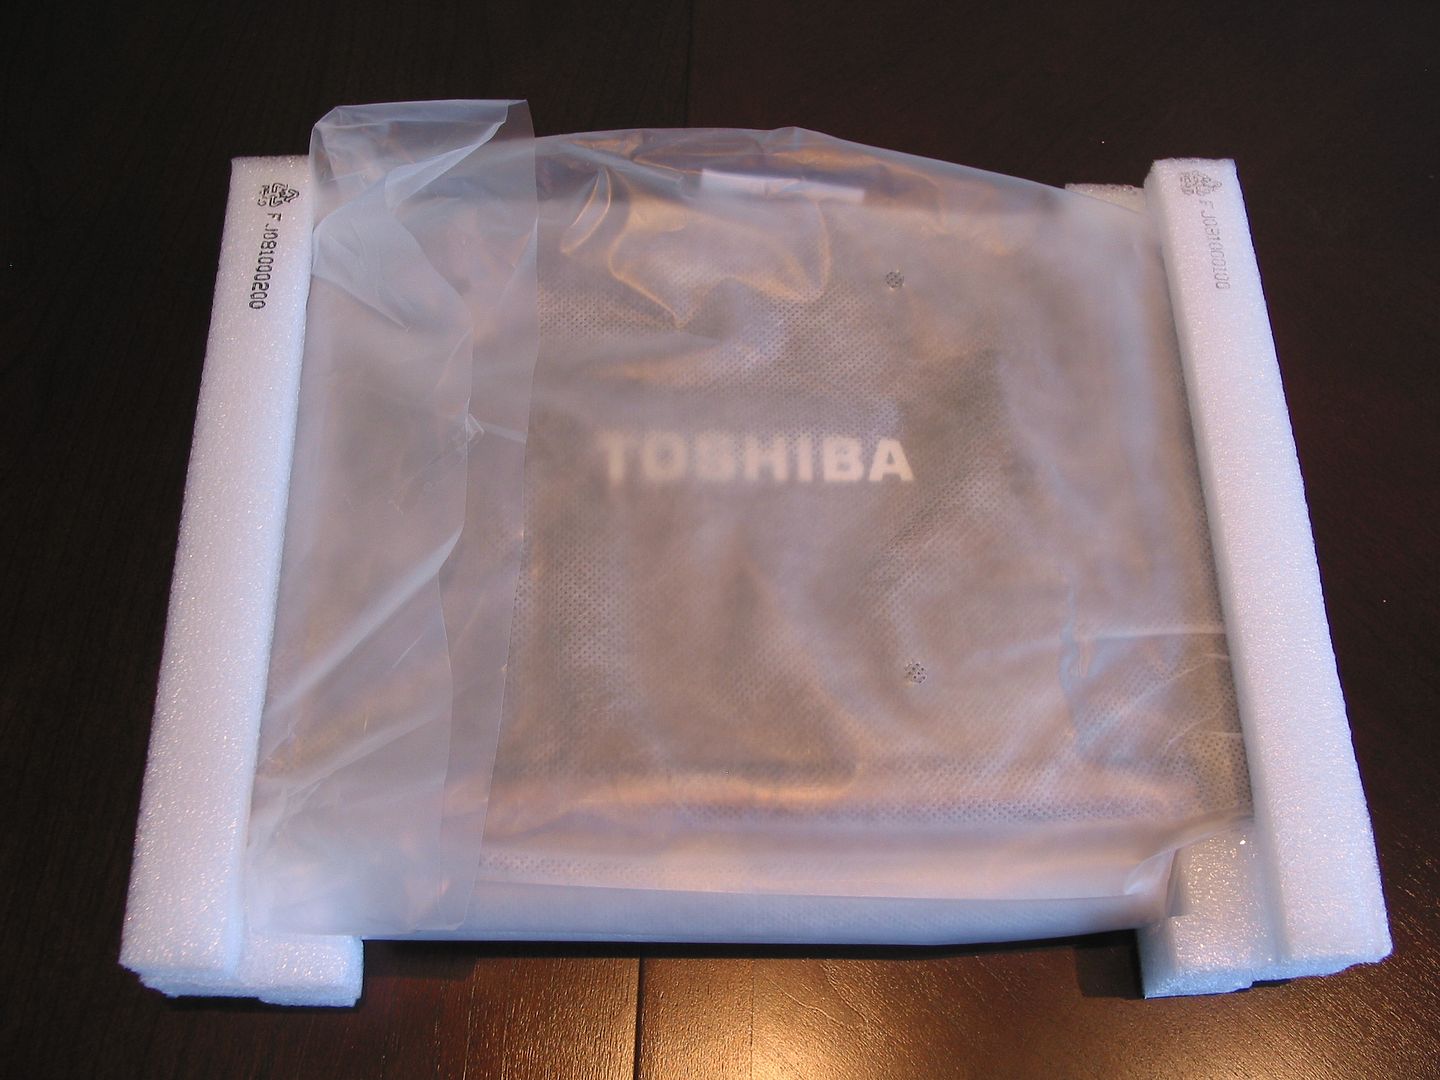 Toshiba NB200 Unboxed